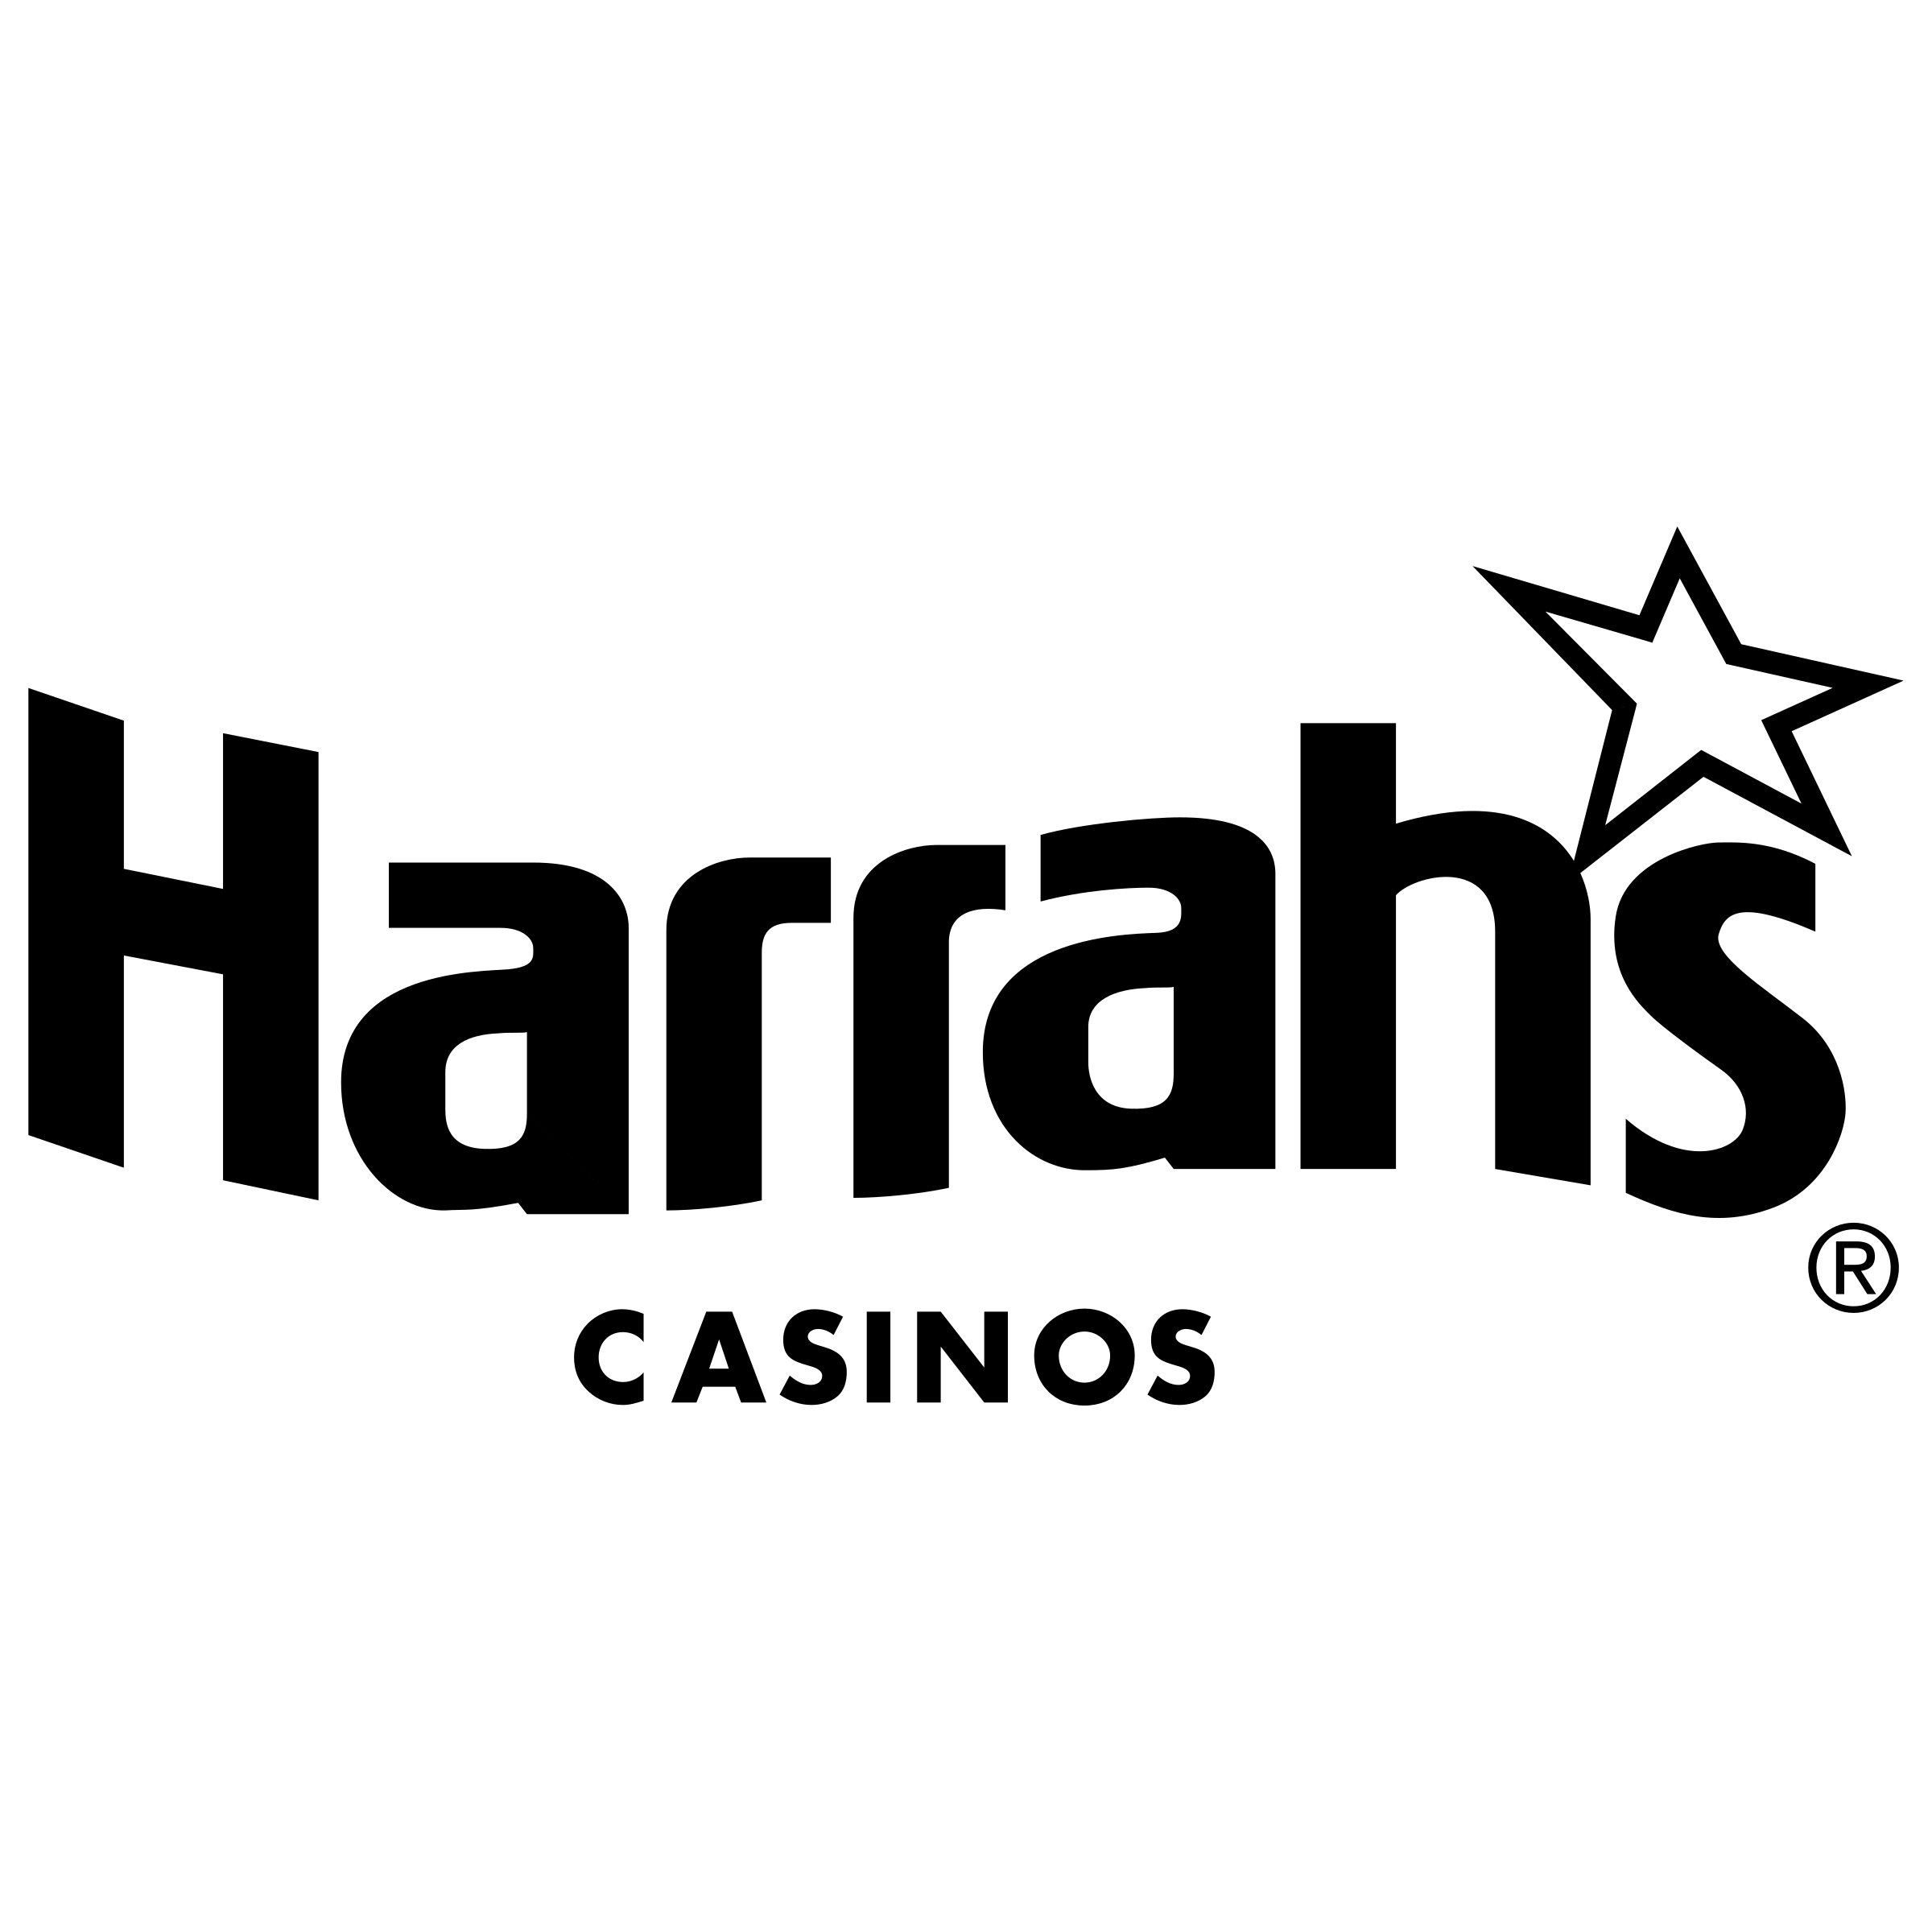 Harrahs Casino Logo - Harrah's Casinos Logo PNG Transparent & SVG Vector - Freebie Supply